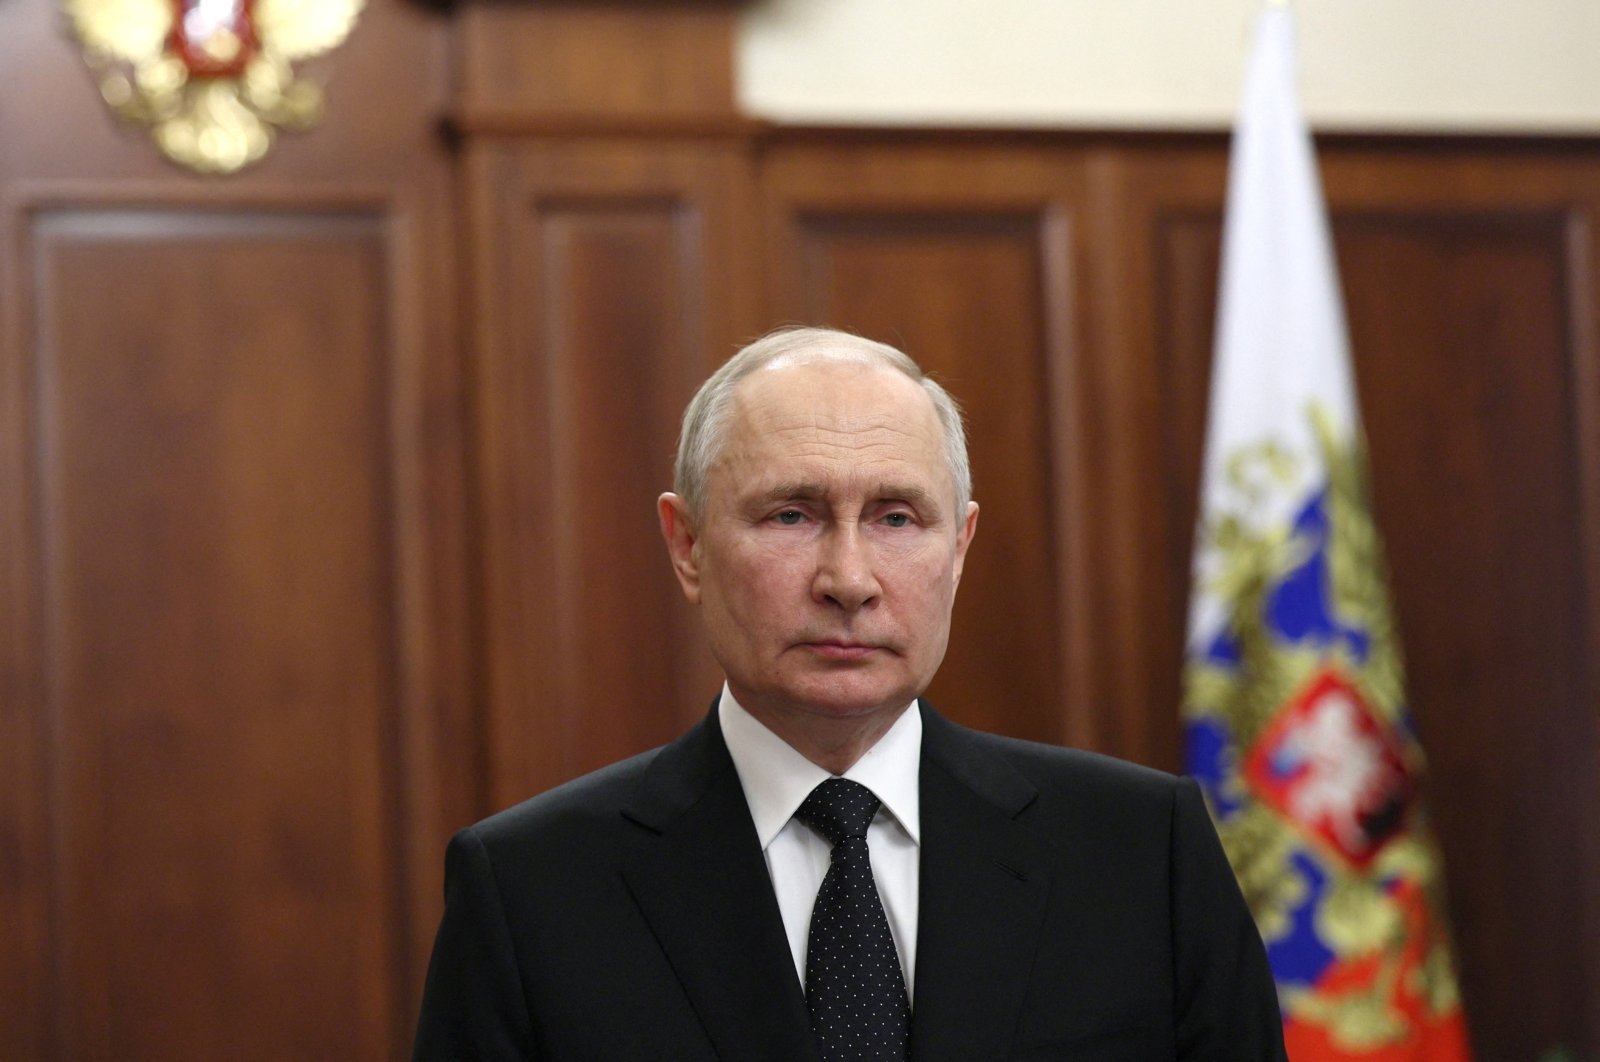 Putin confident in Ukraine plans ahead of security council meeting